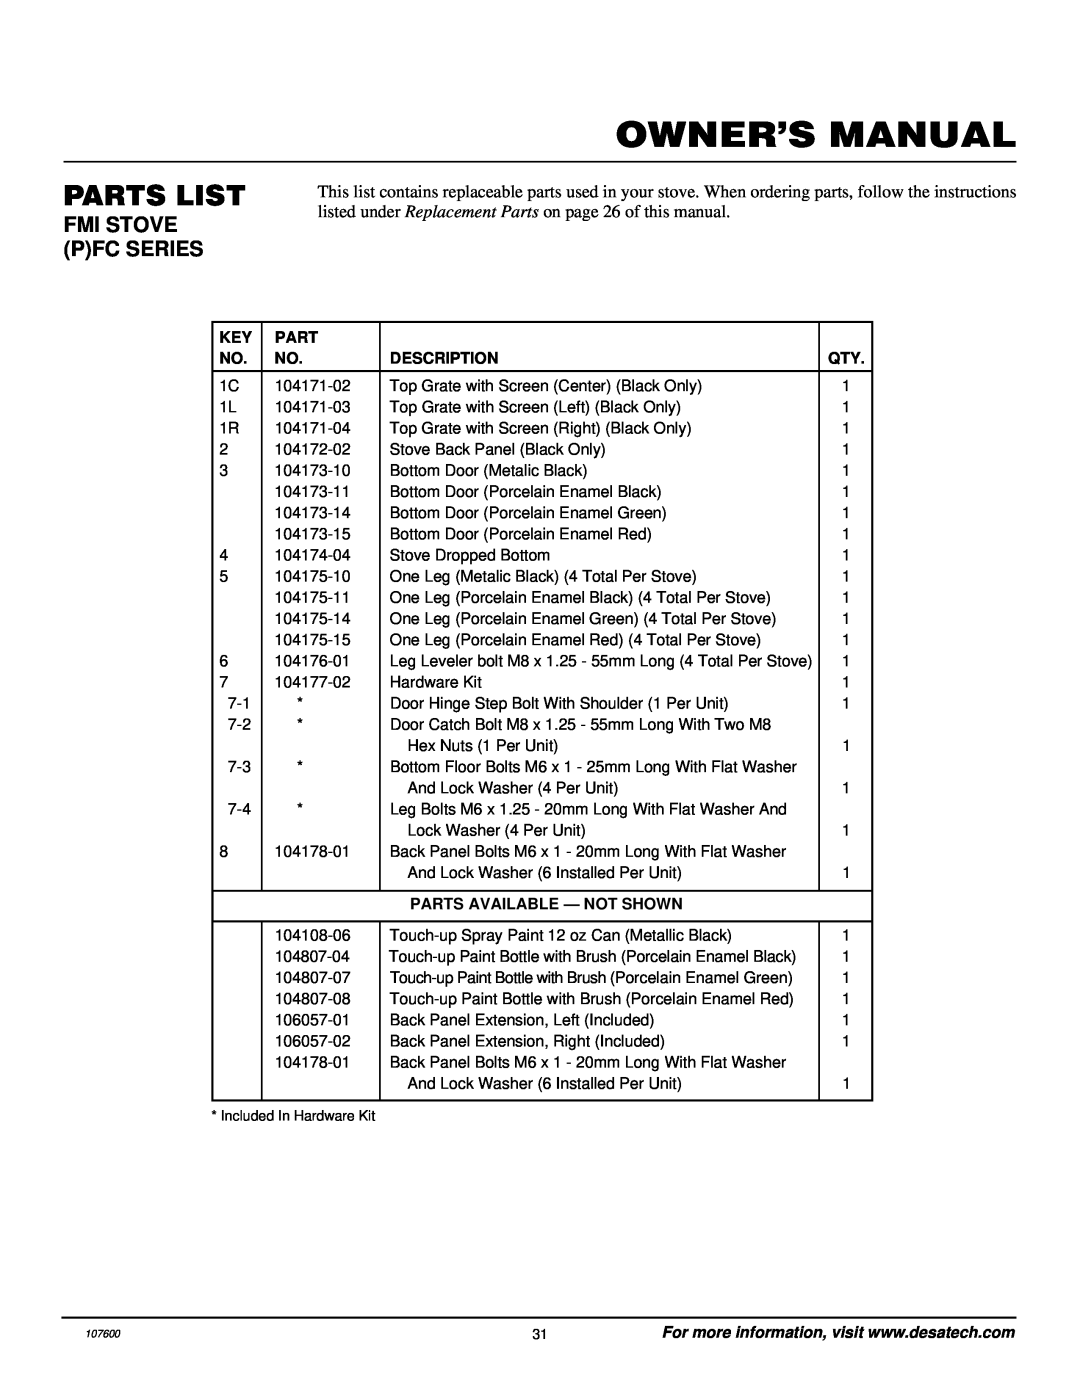 Desa FSBVBPC, FSBVBNC installation manual Parts List, Fmi Stove Pfc Series, Description, Parts Available - Not Shown 